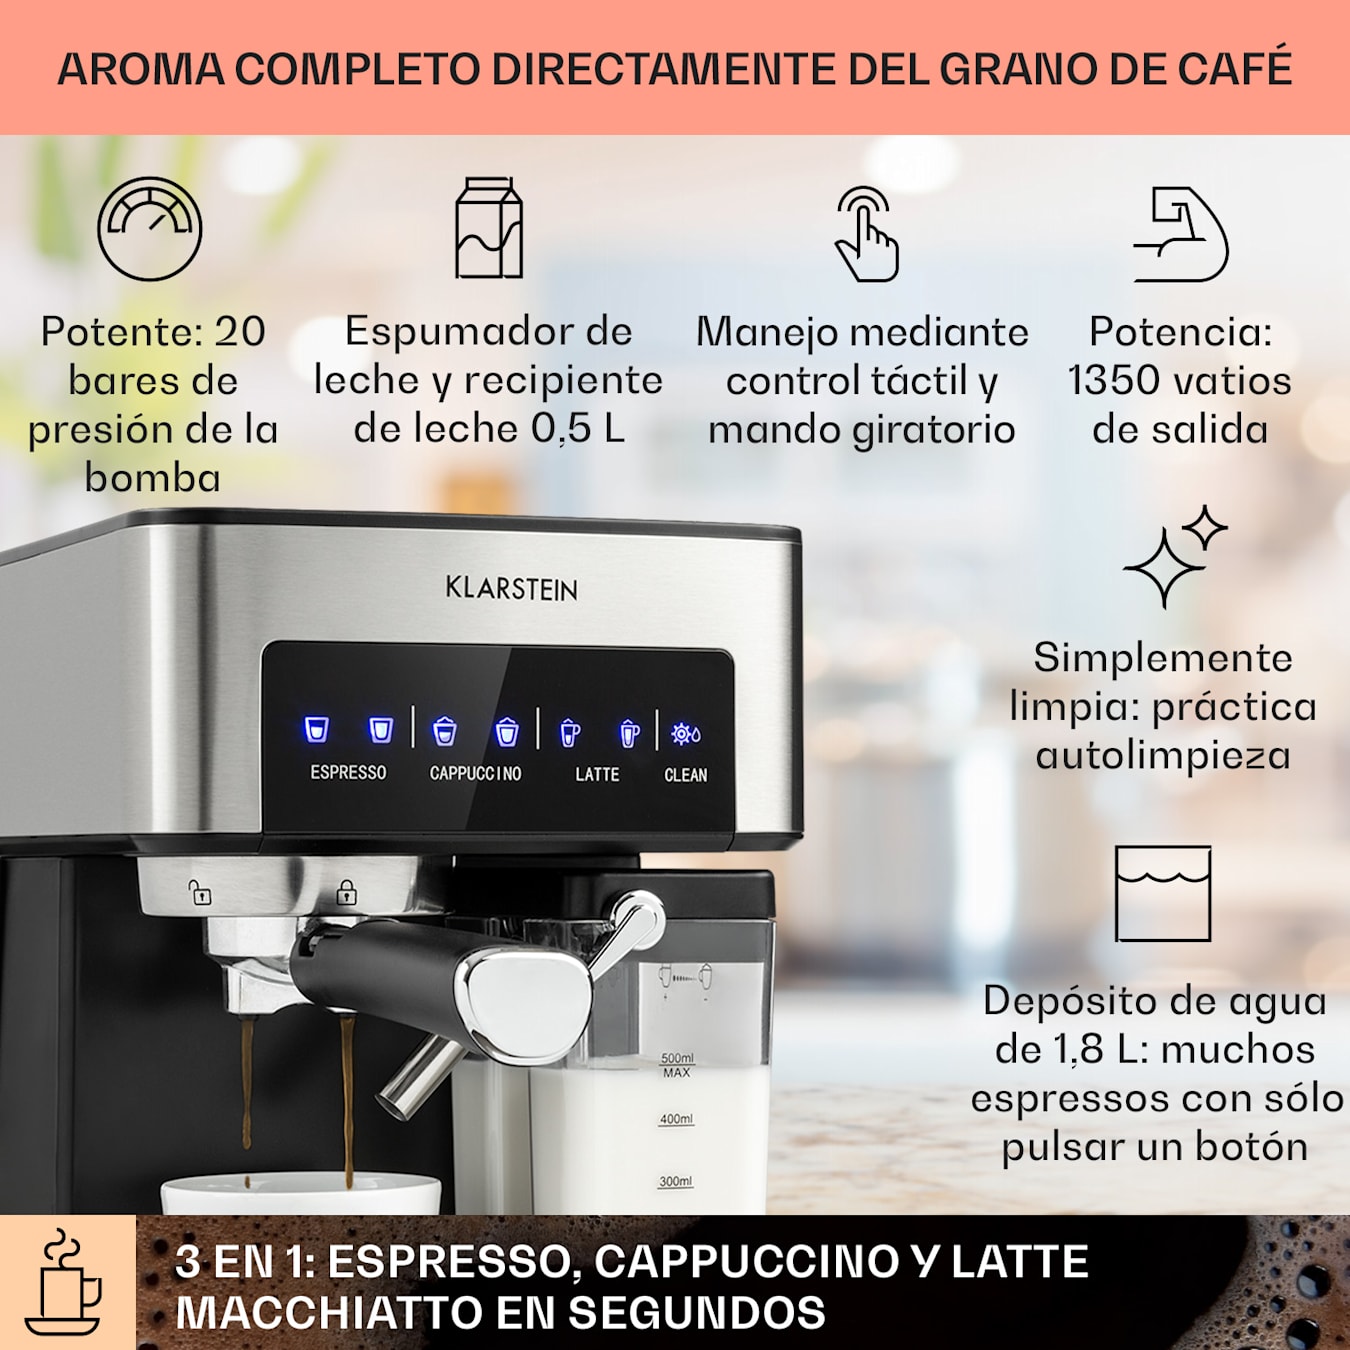 Cafetera Evo Delonghi Full Automática + 1 café en granos Crema d